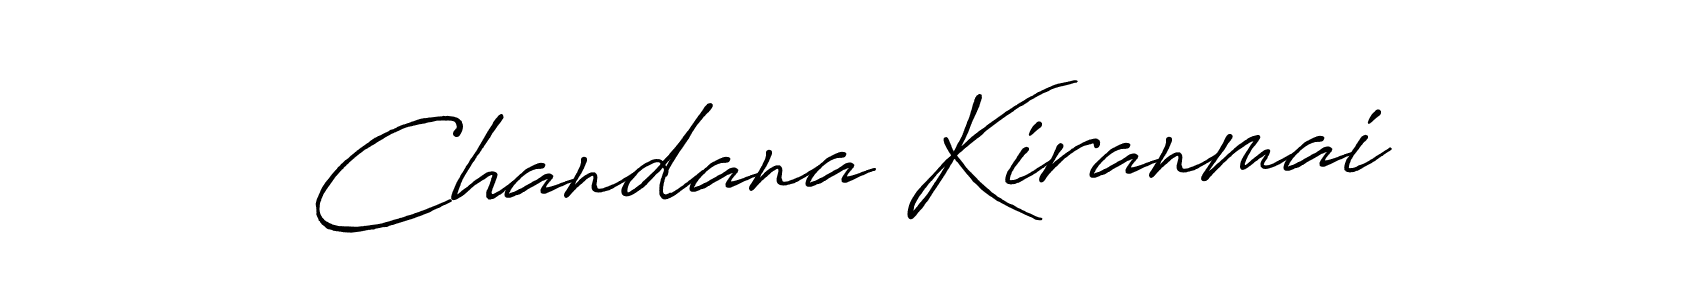 How to Draw Chandana Kiranmai signature style? Antro_Vectra_Bolder is a latest design signature styles for name Chandana Kiranmai. Chandana Kiranmai signature style 7 images and pictures png